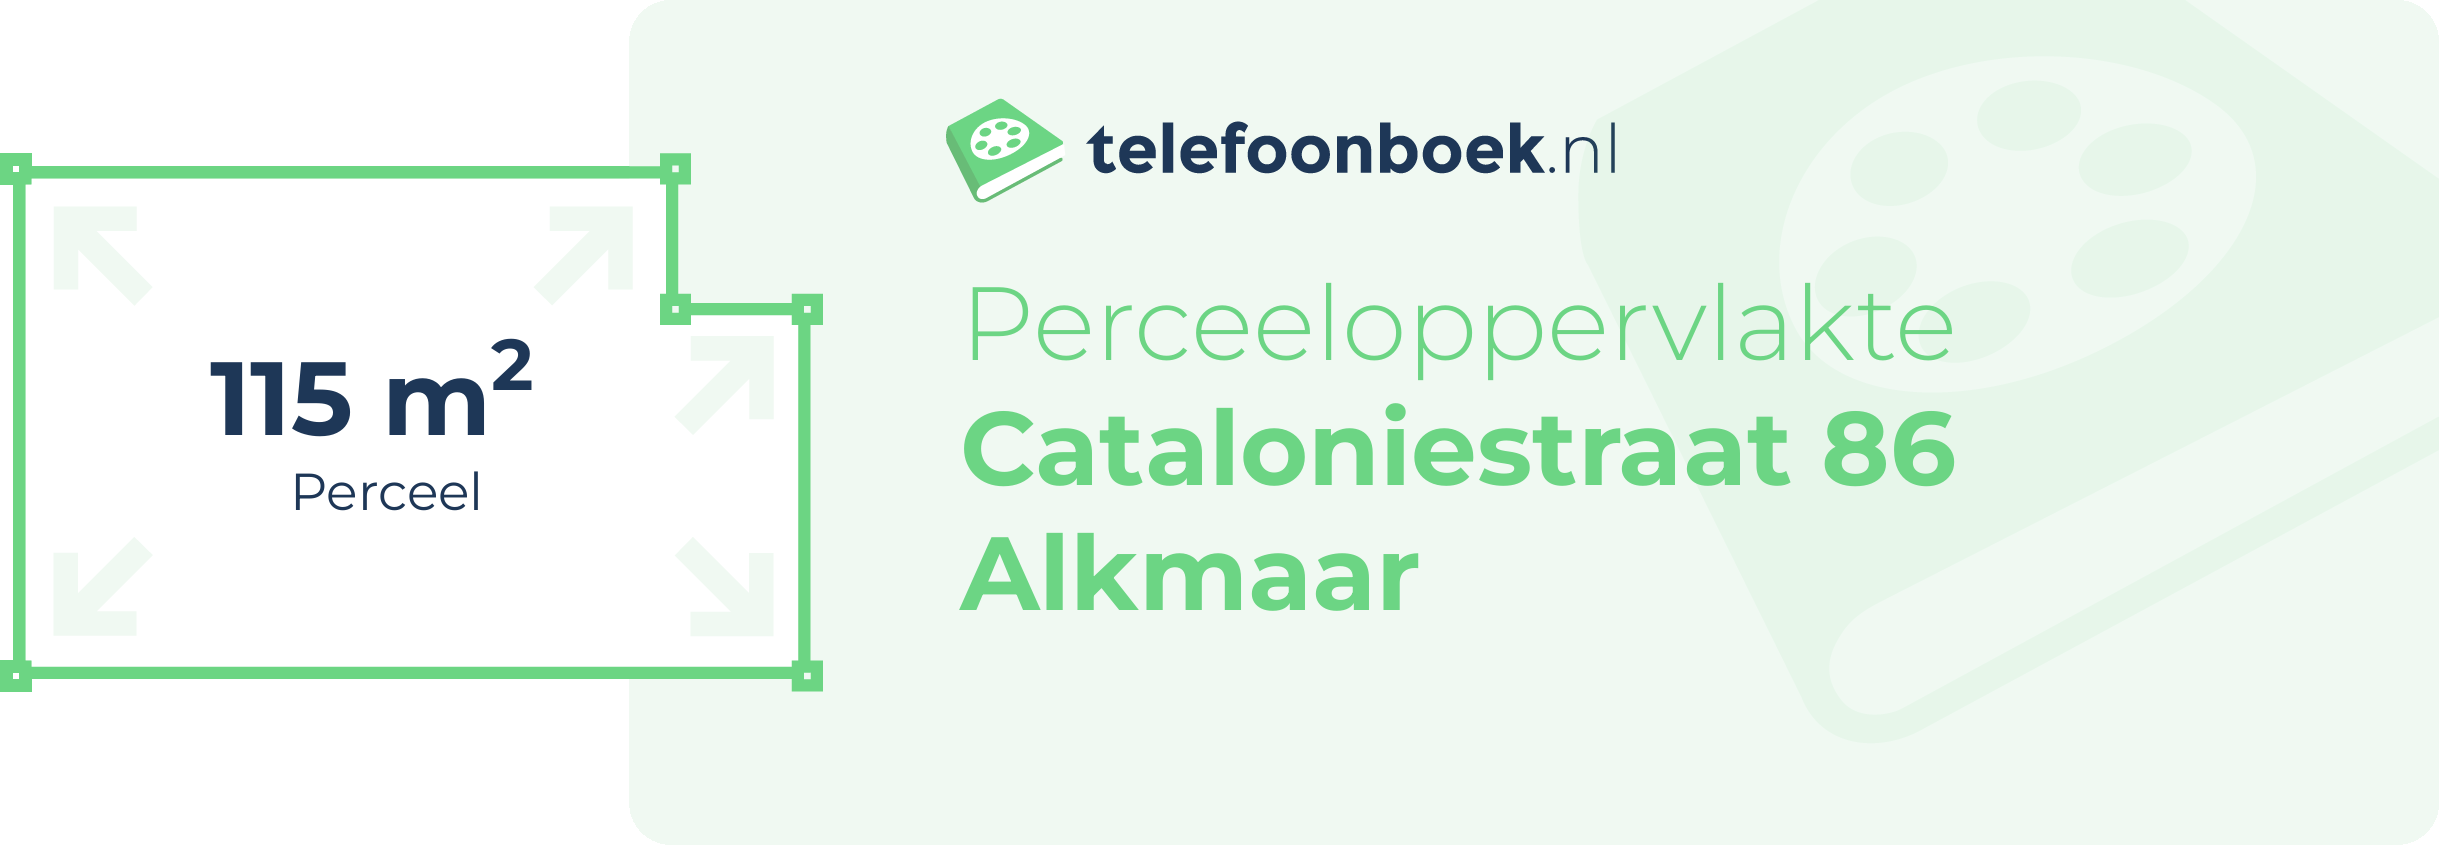 Perceeloppervlakte Cataloniestraat 86 Alkmaar